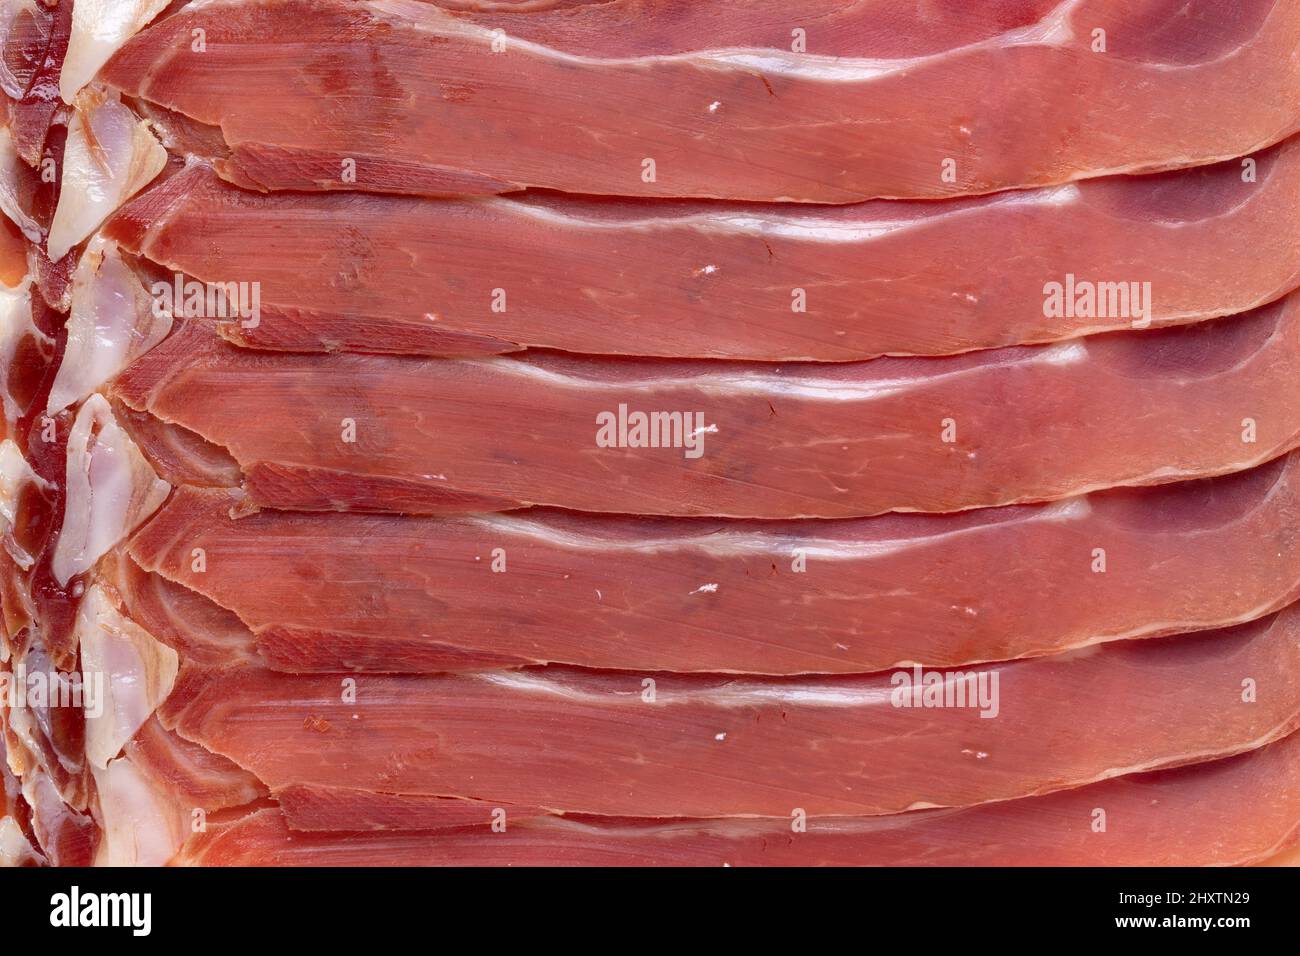 Sliced Spanish raw ham, serrano ham, close up full frame as background Stock Photo